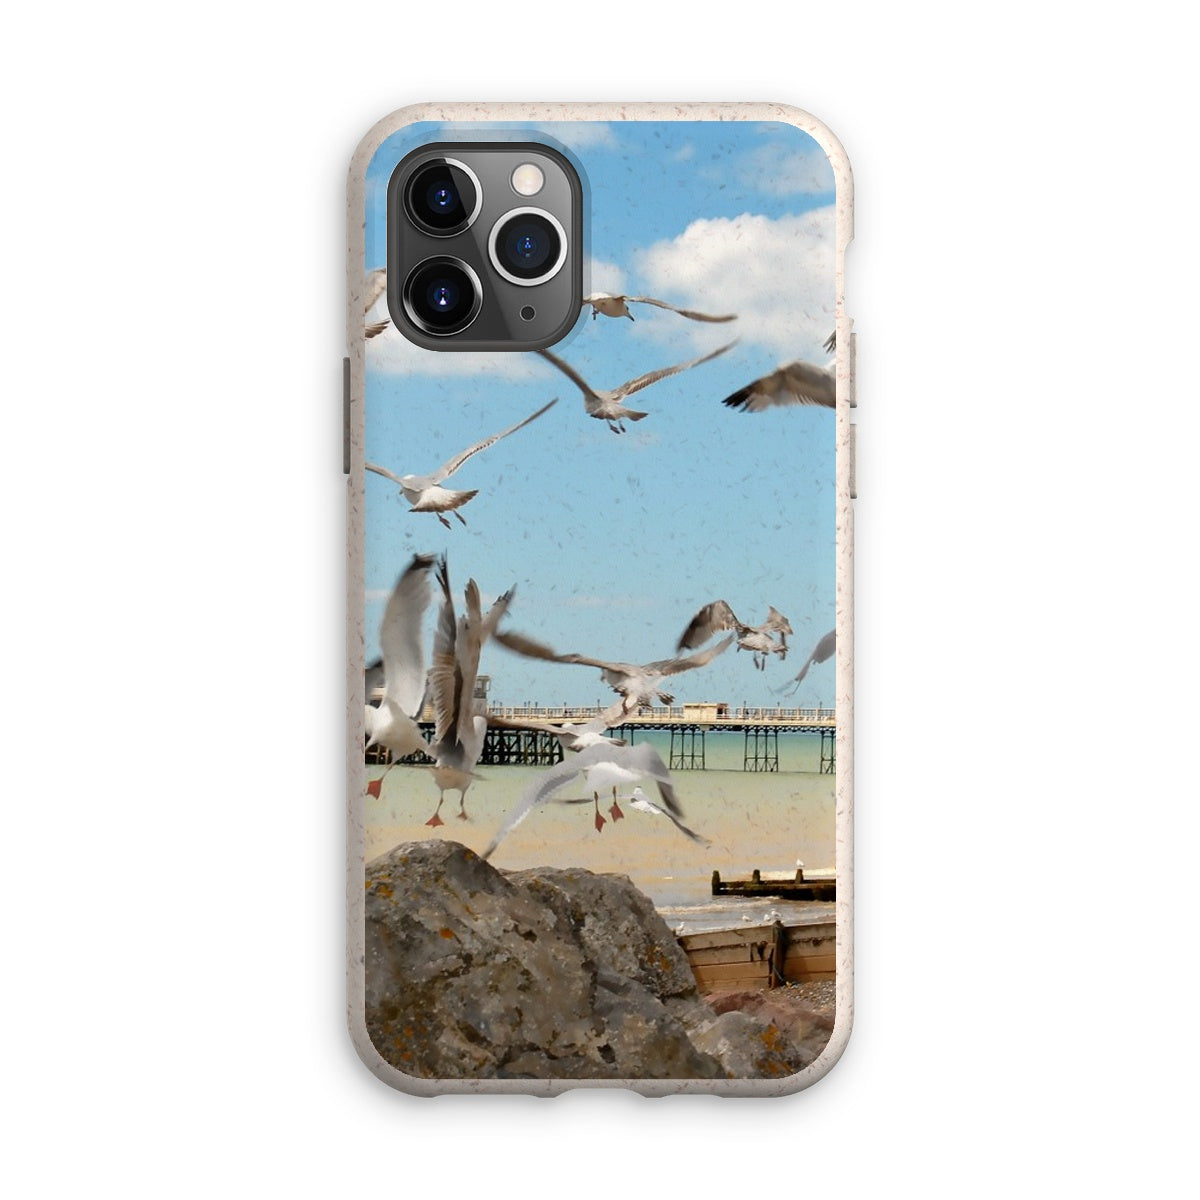 Seagulls At Feeding Time By David Sawyer Eco Phone Case